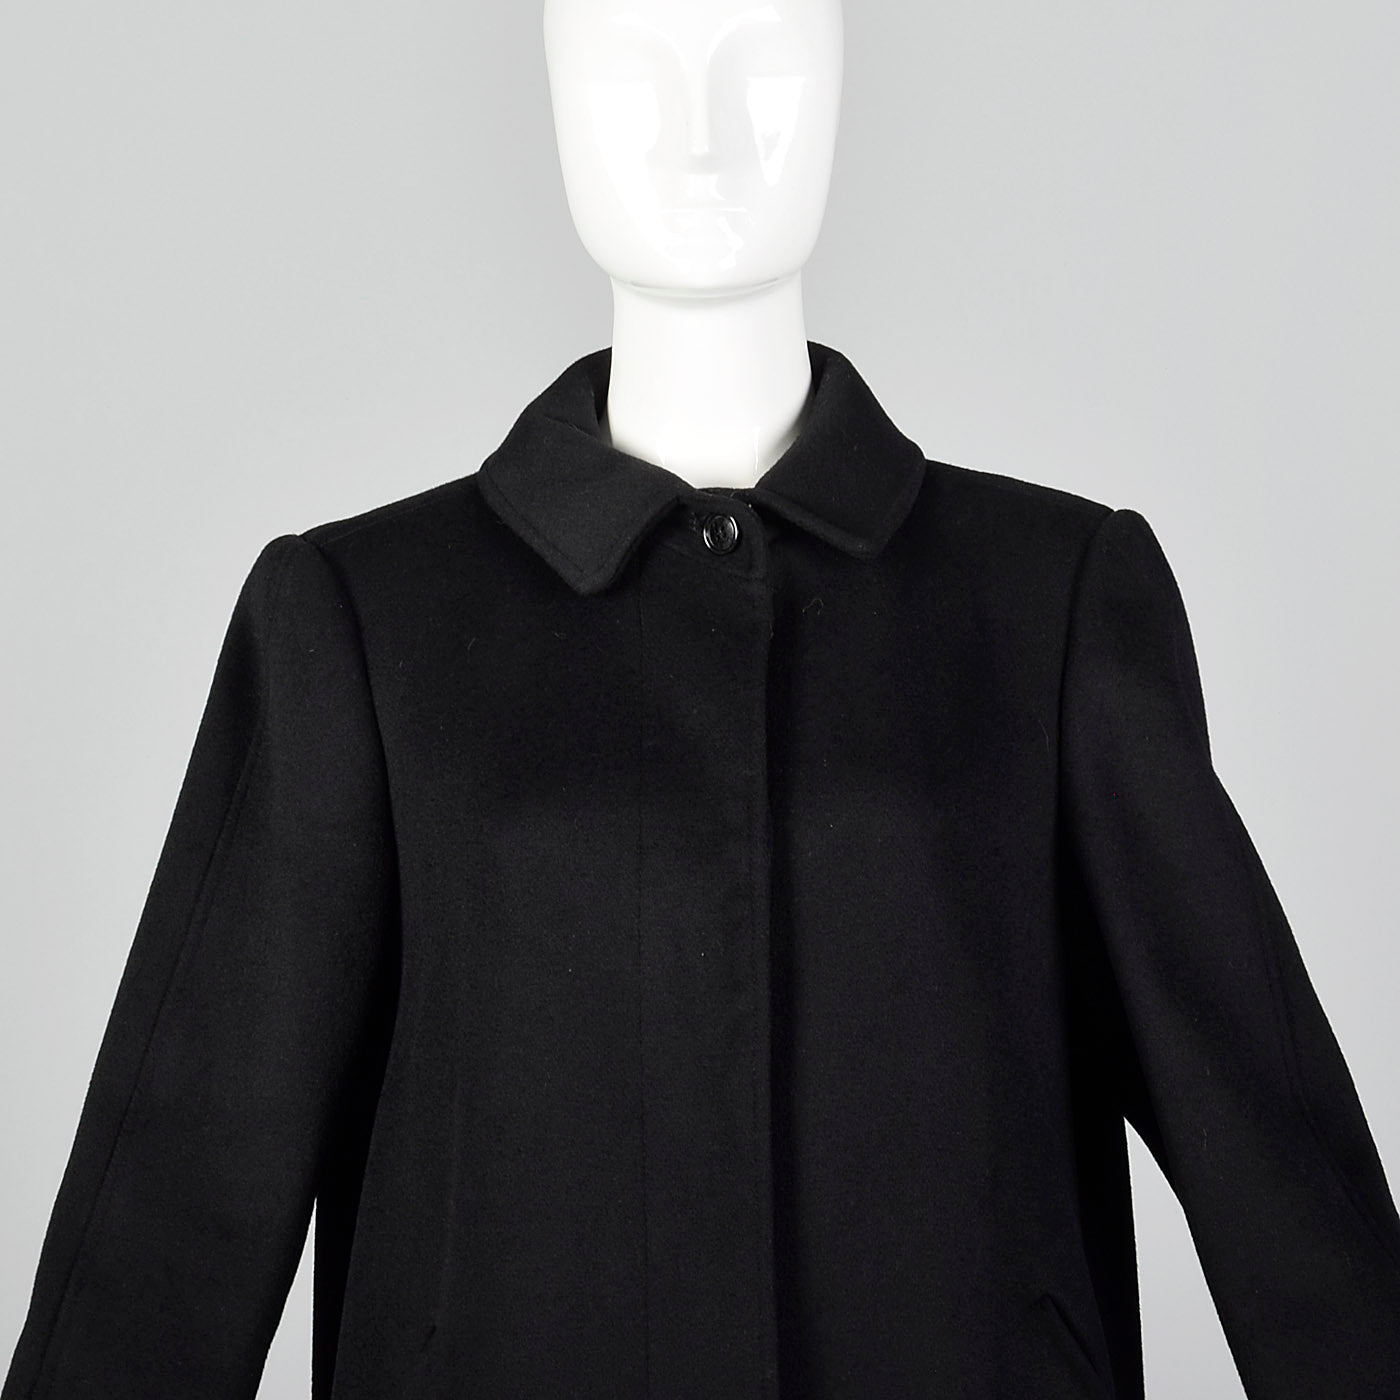 1980s Black Wool Winter Coat